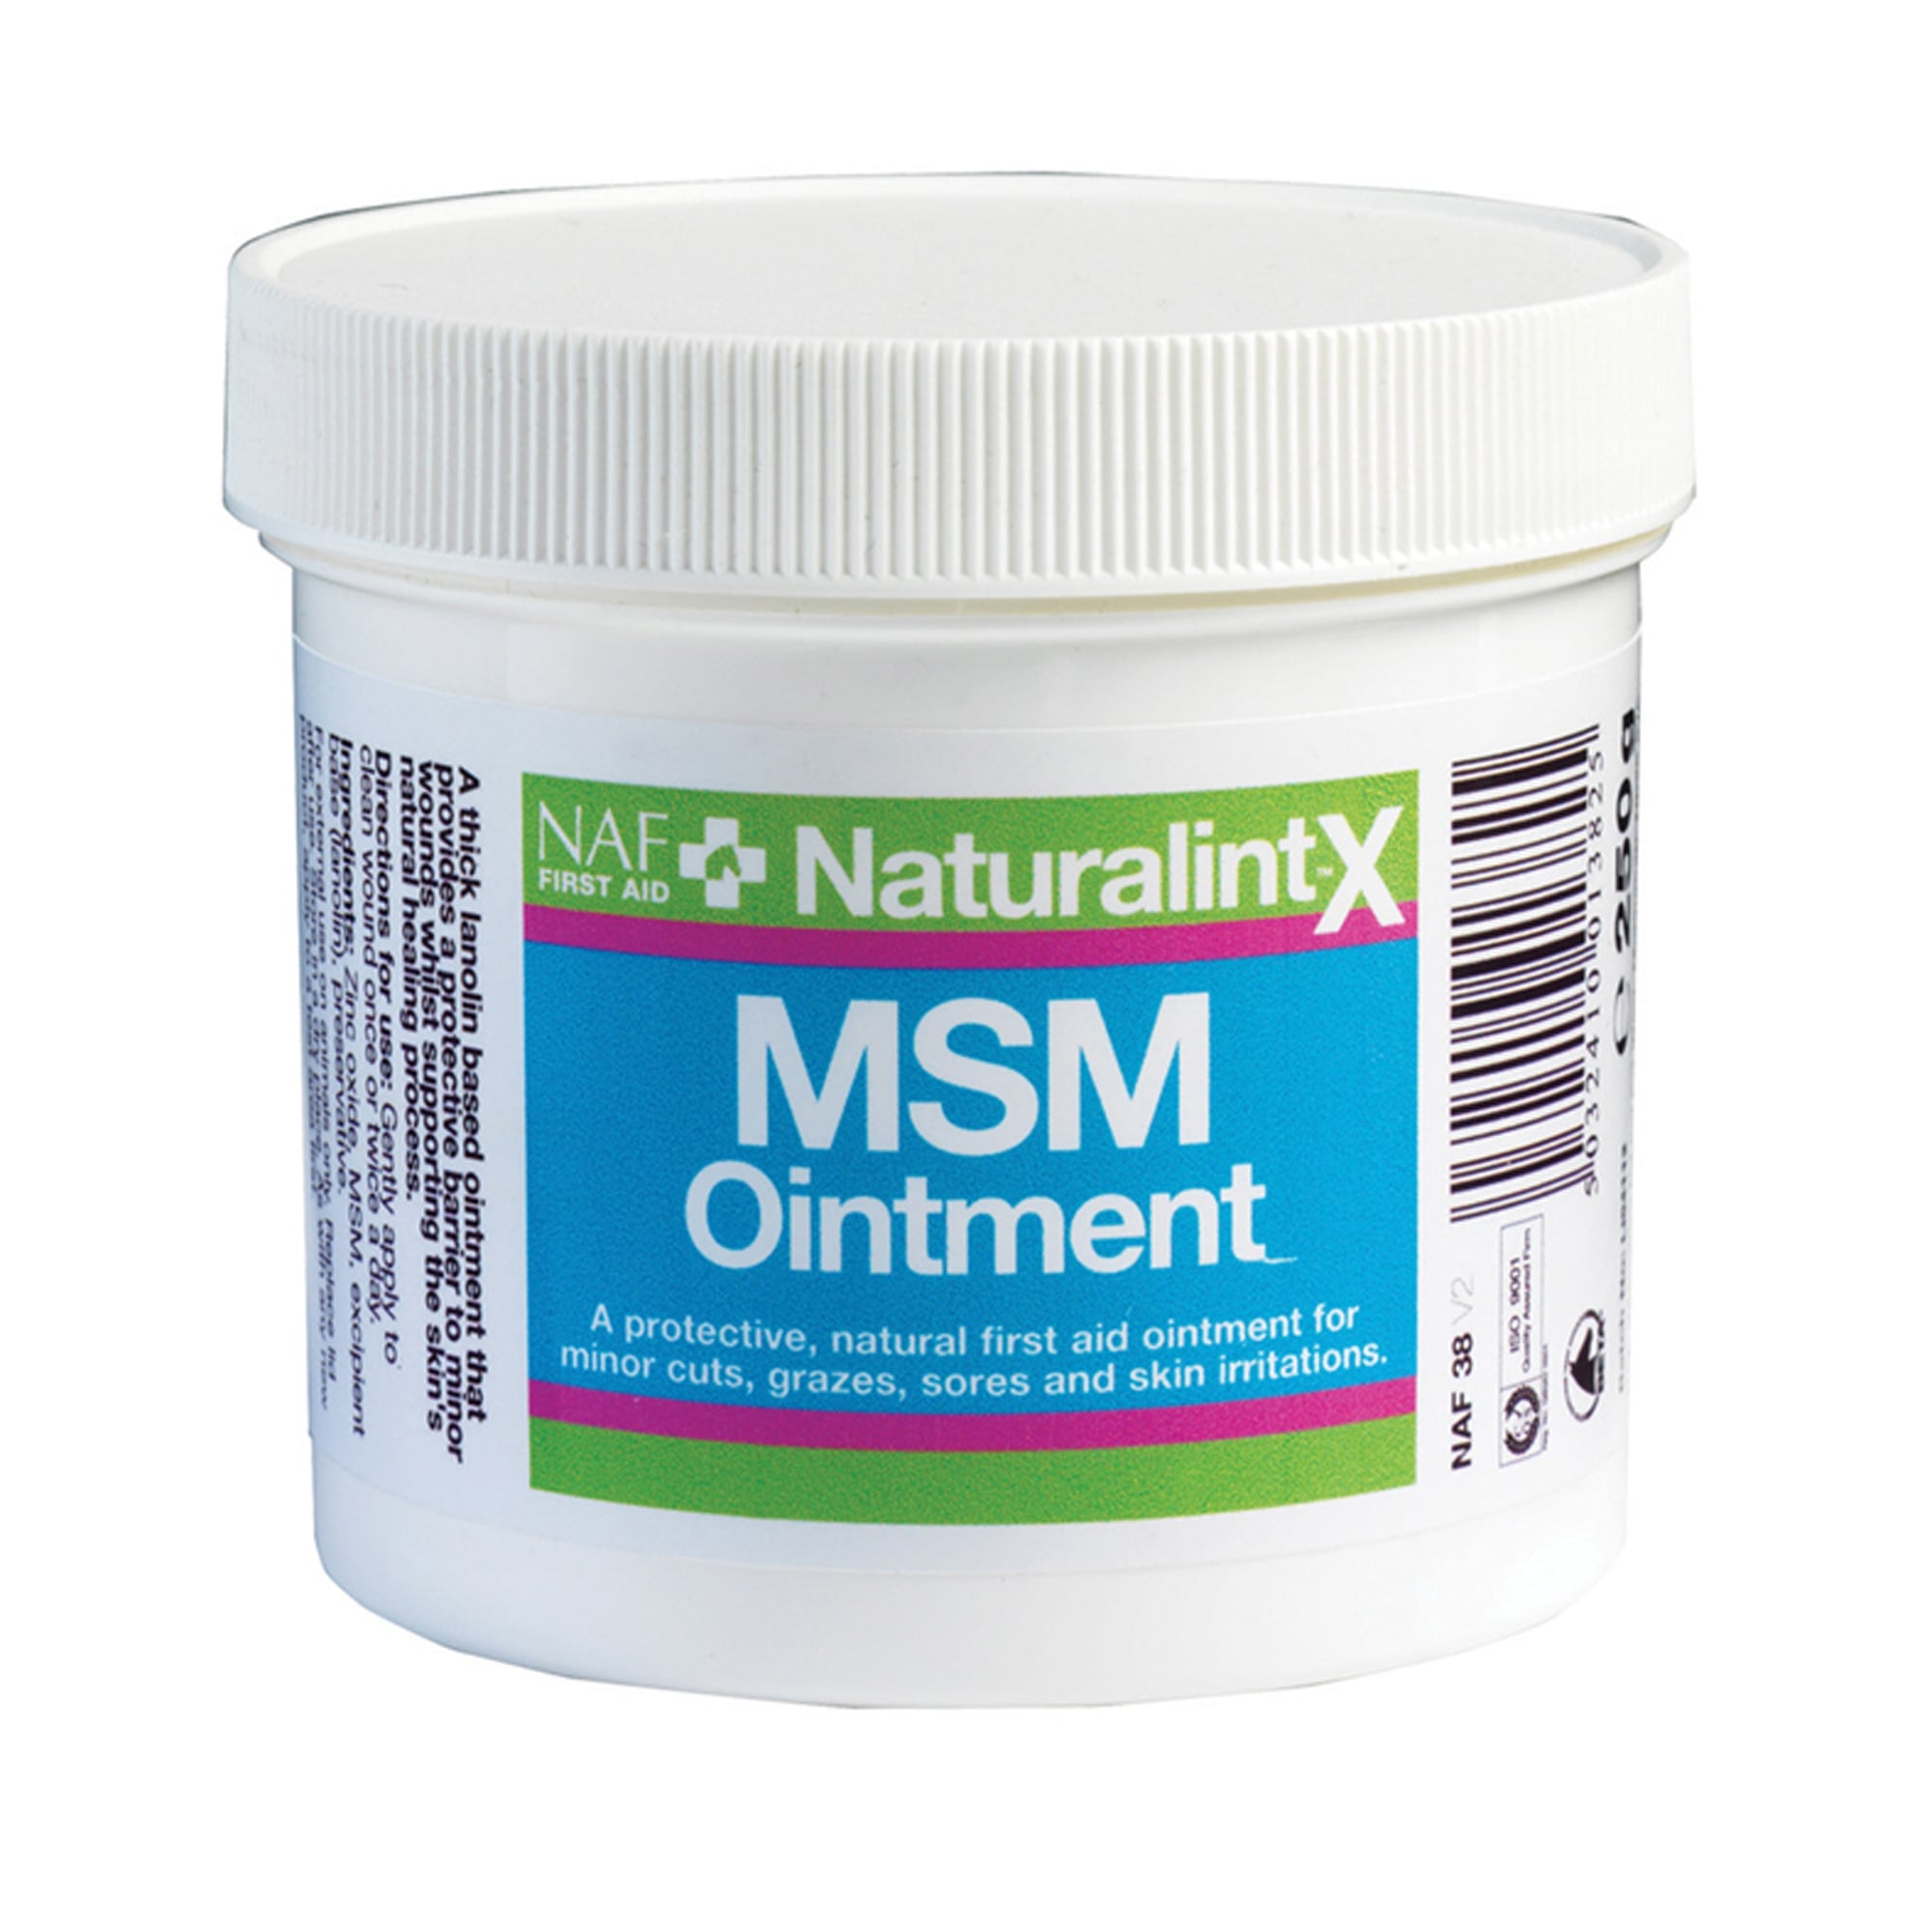 NAF NaturalintX MSM Ointment